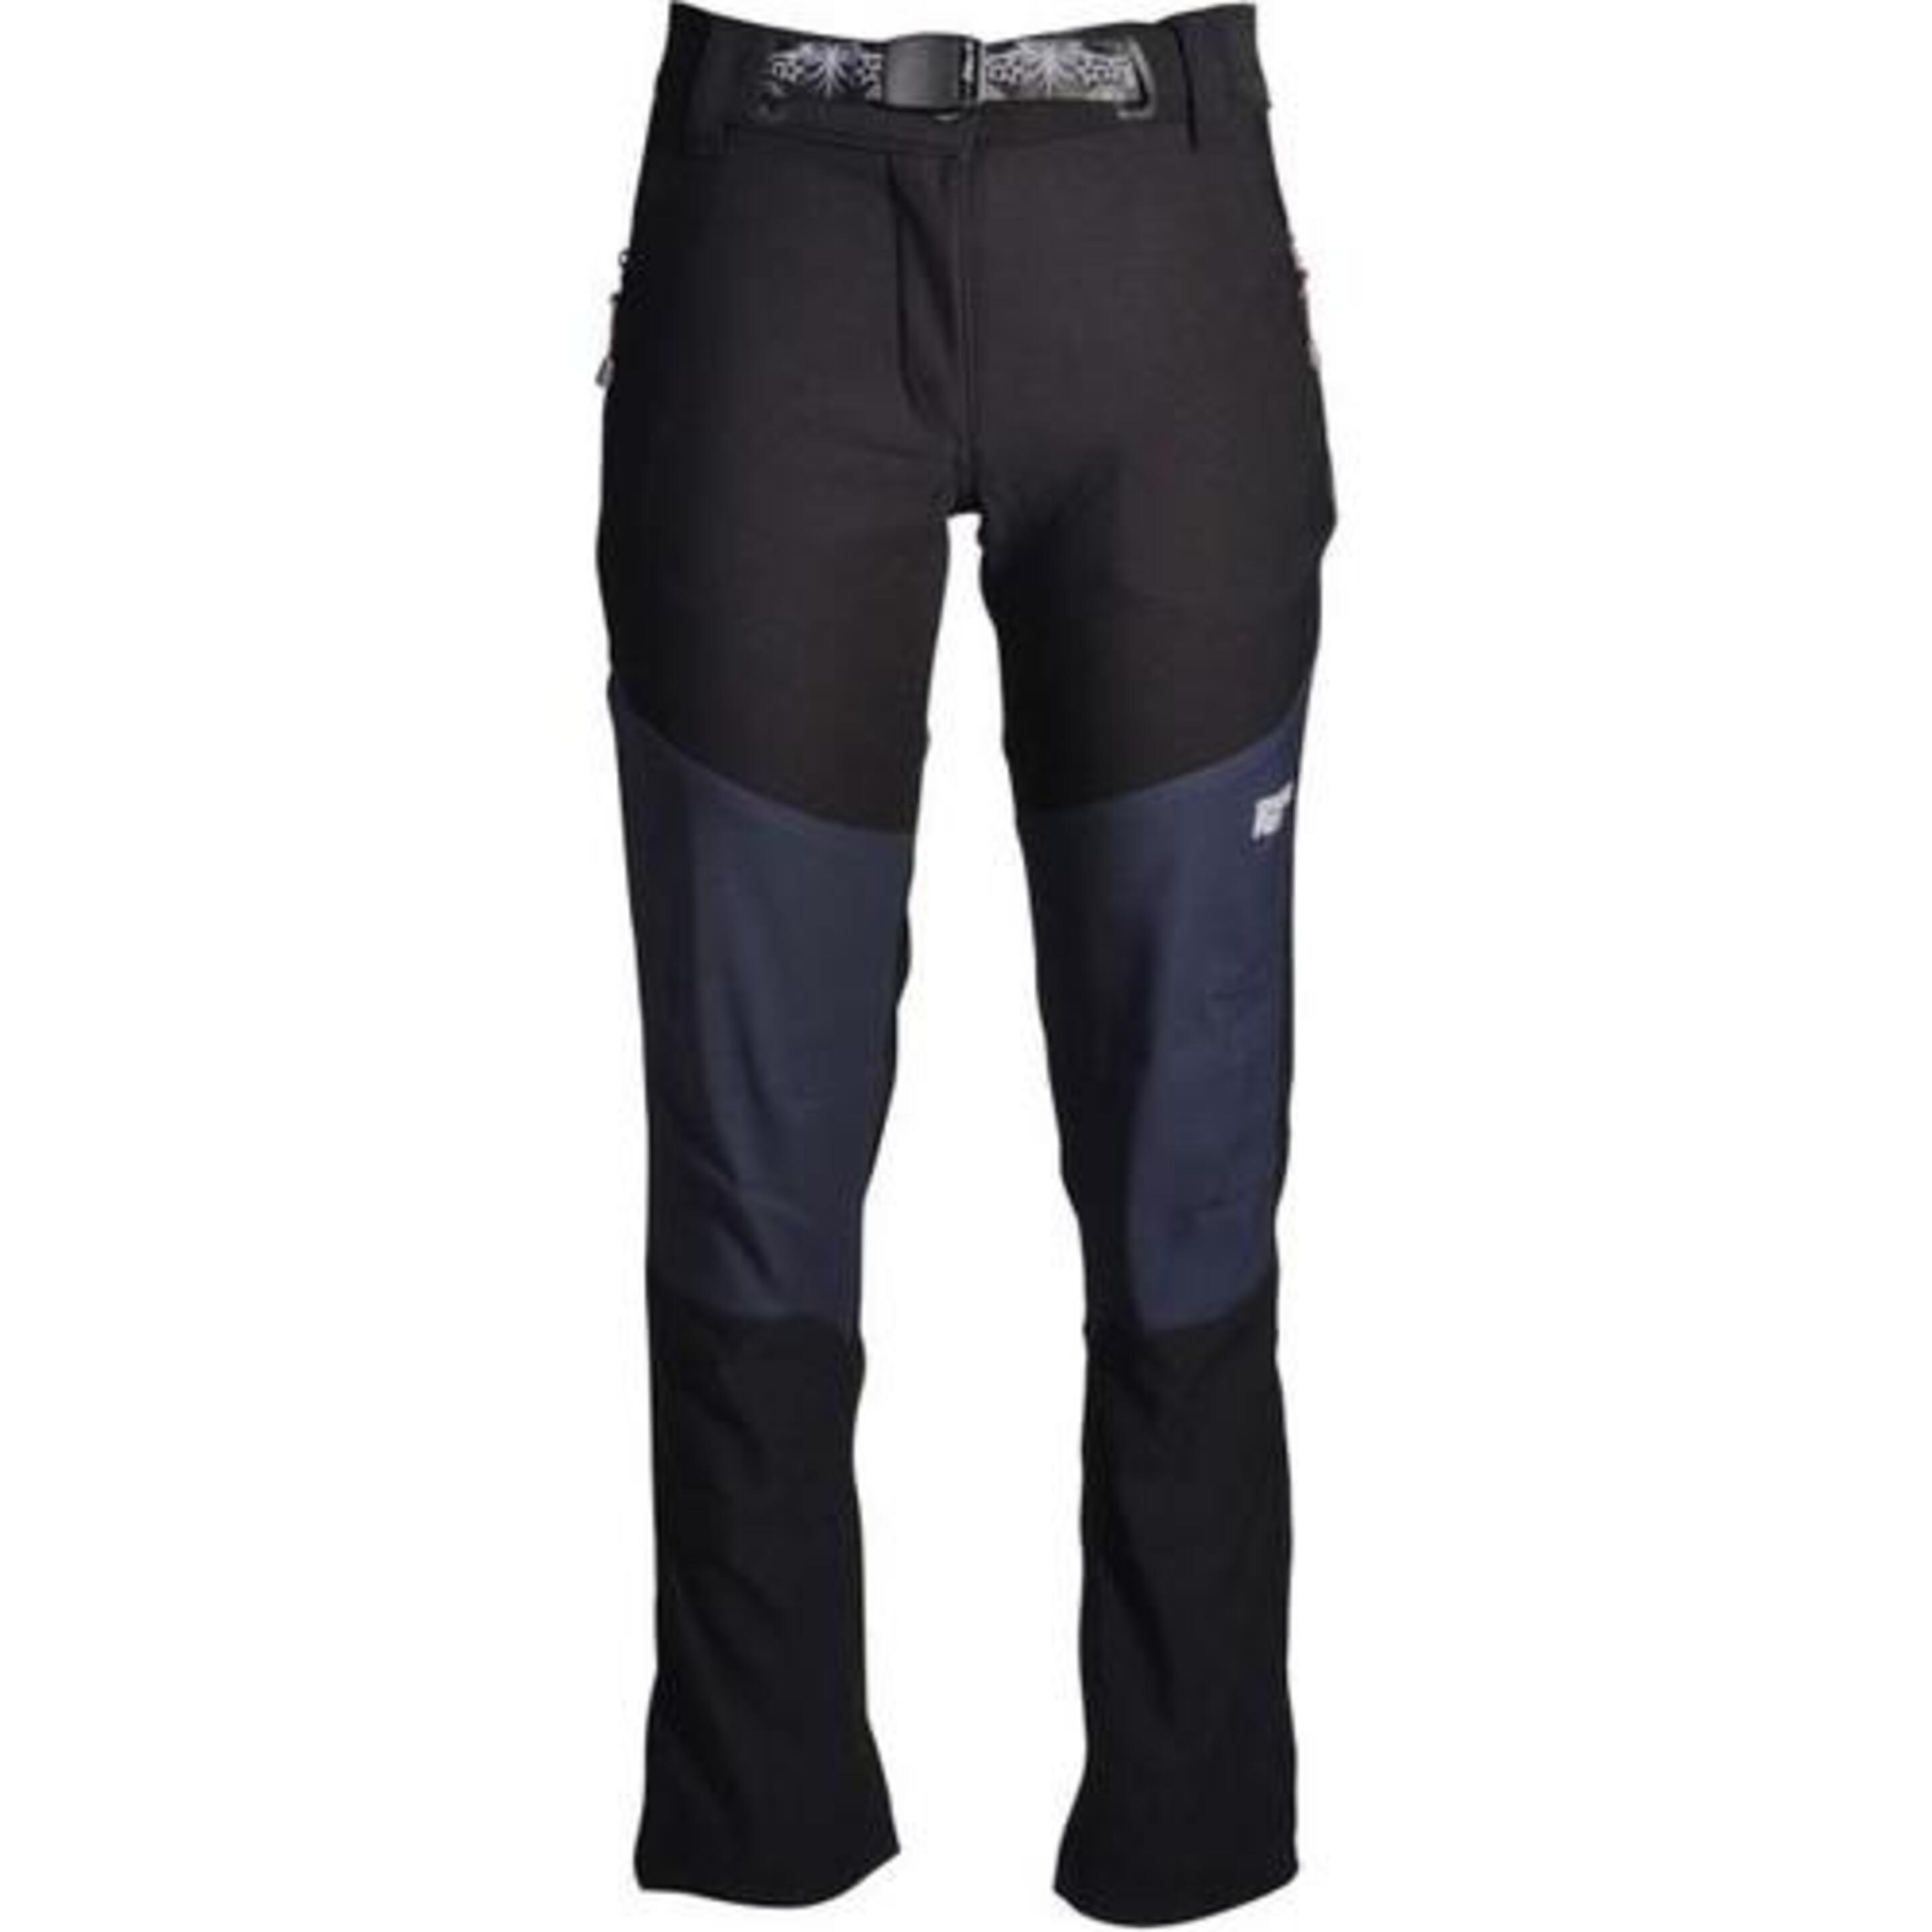 Pantalones Sphere Pro Trekking. 7127050. - azul oscuro/negro - Pantalón Trekking Mujer. Oferta  MKP